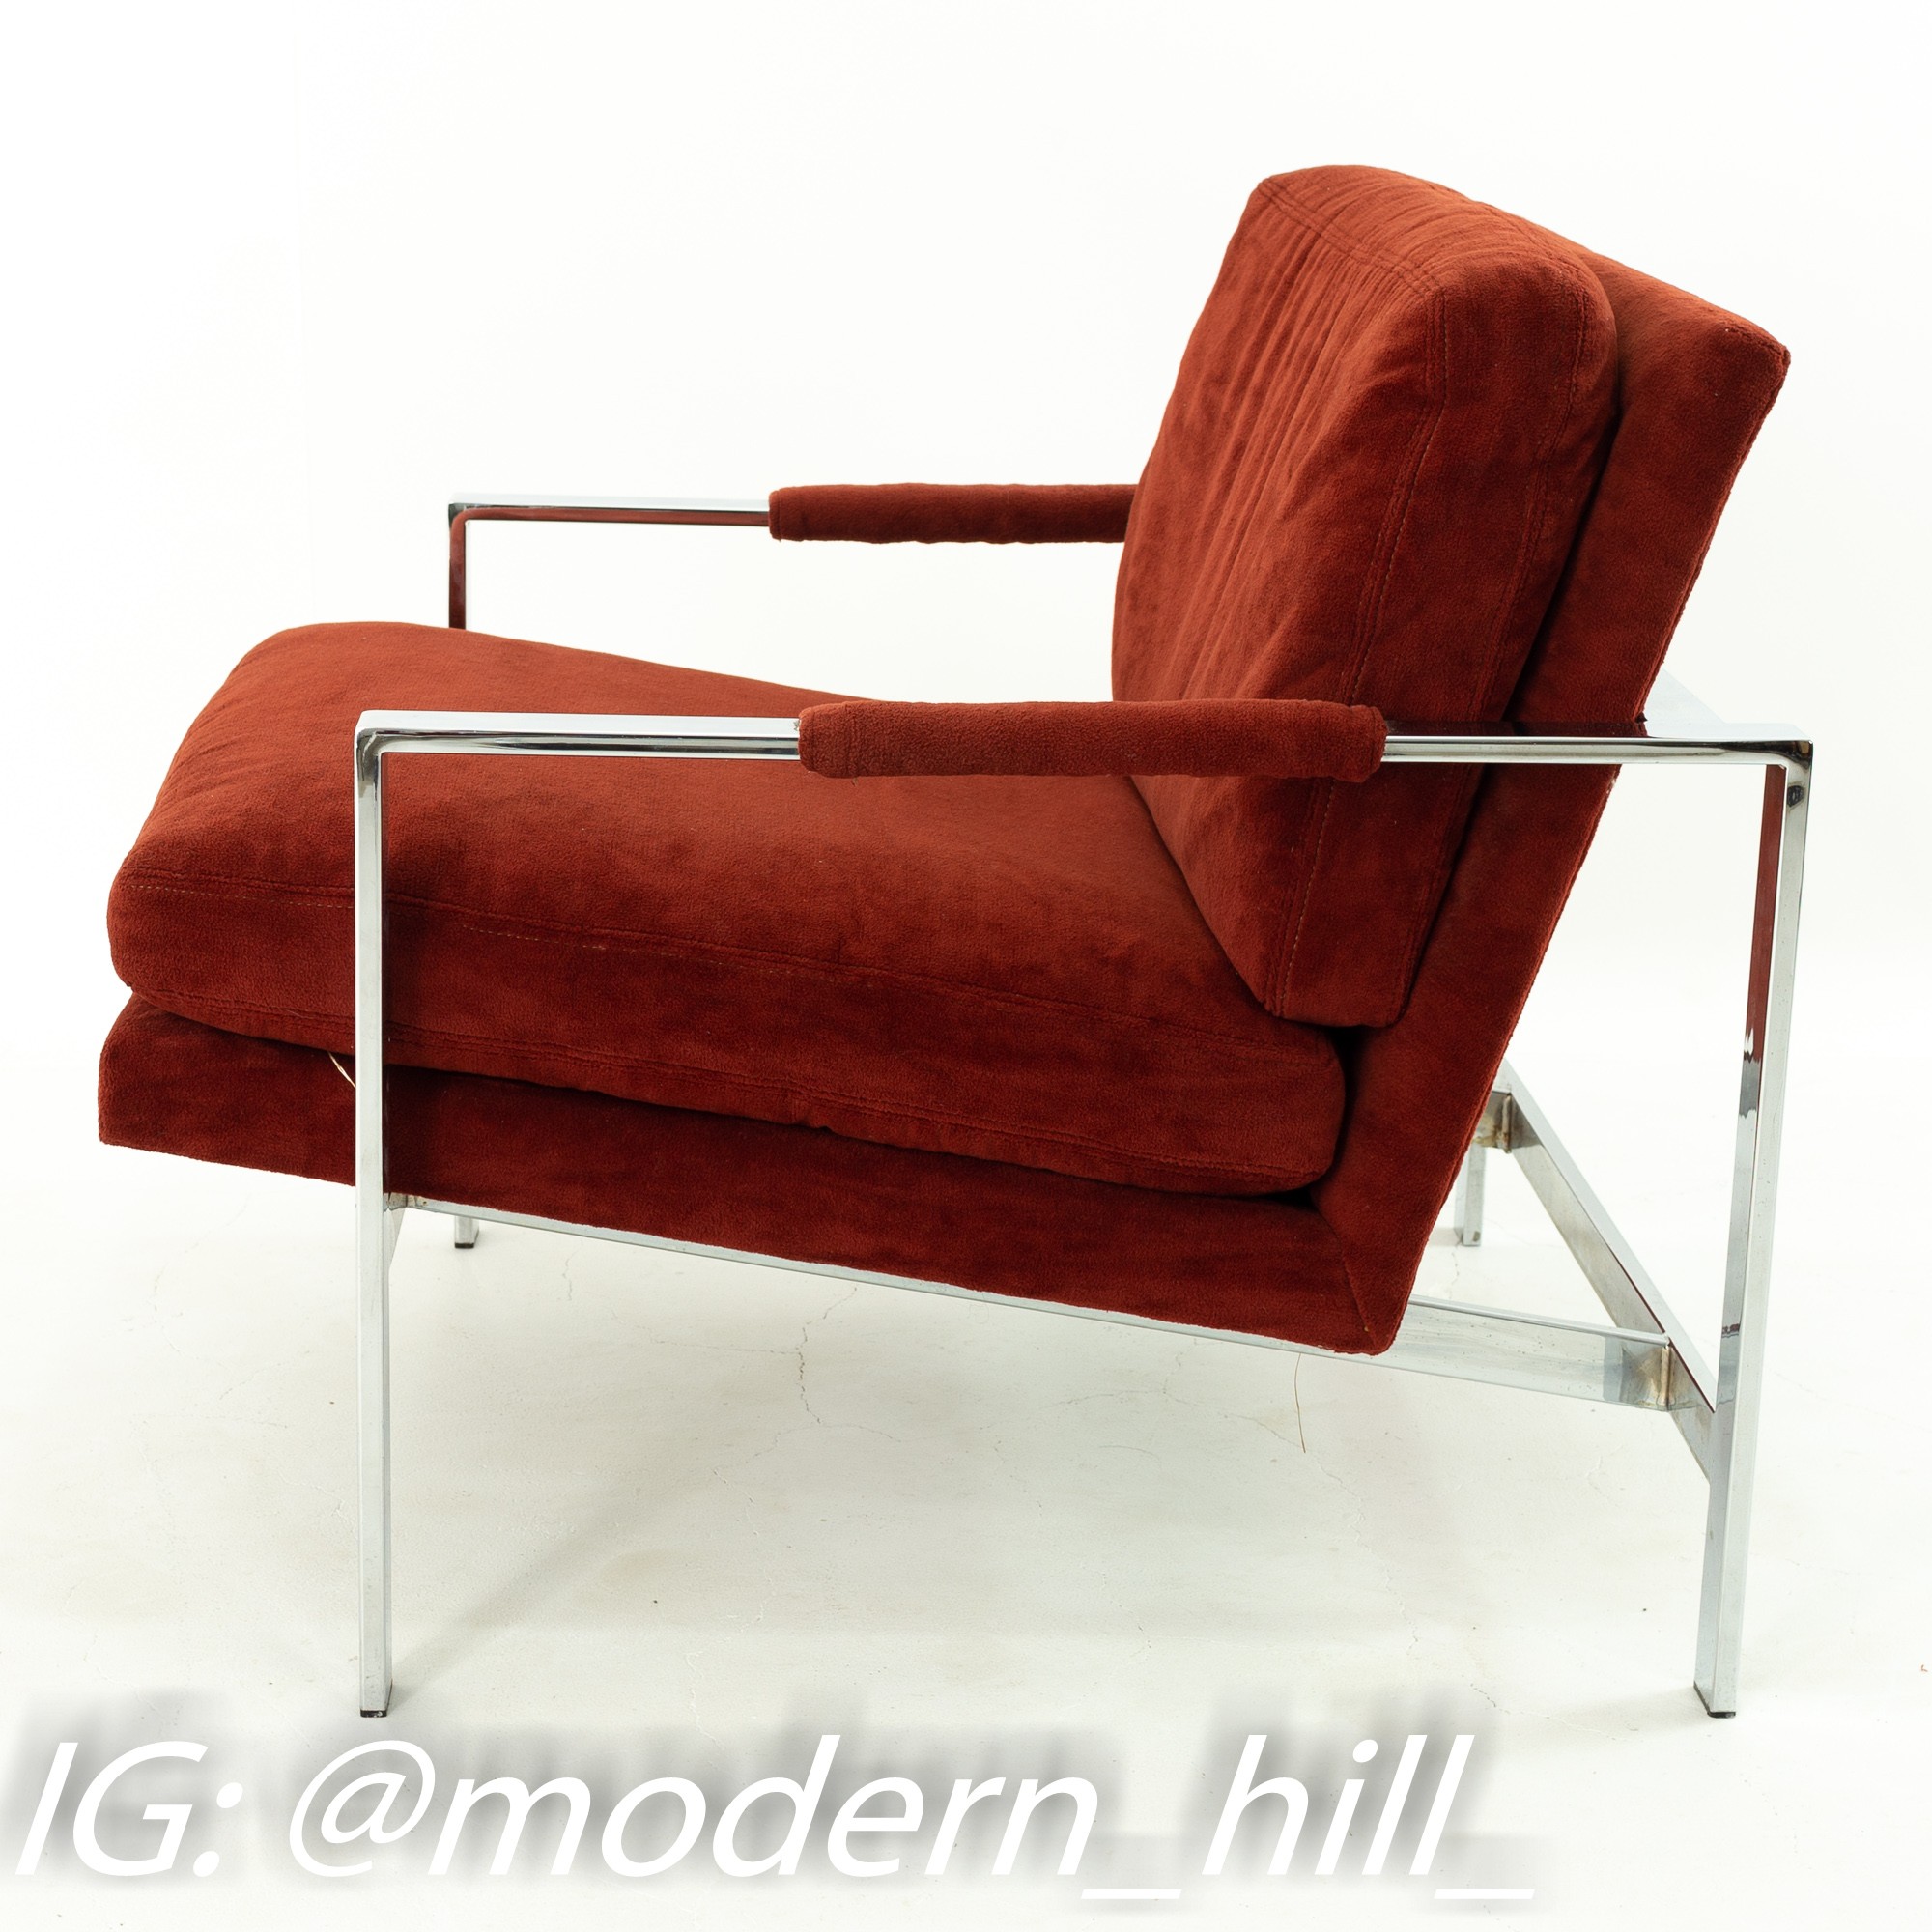 Patrician Furniture Company Milo Baughman Style Mid Century Chrome Lounge Chair